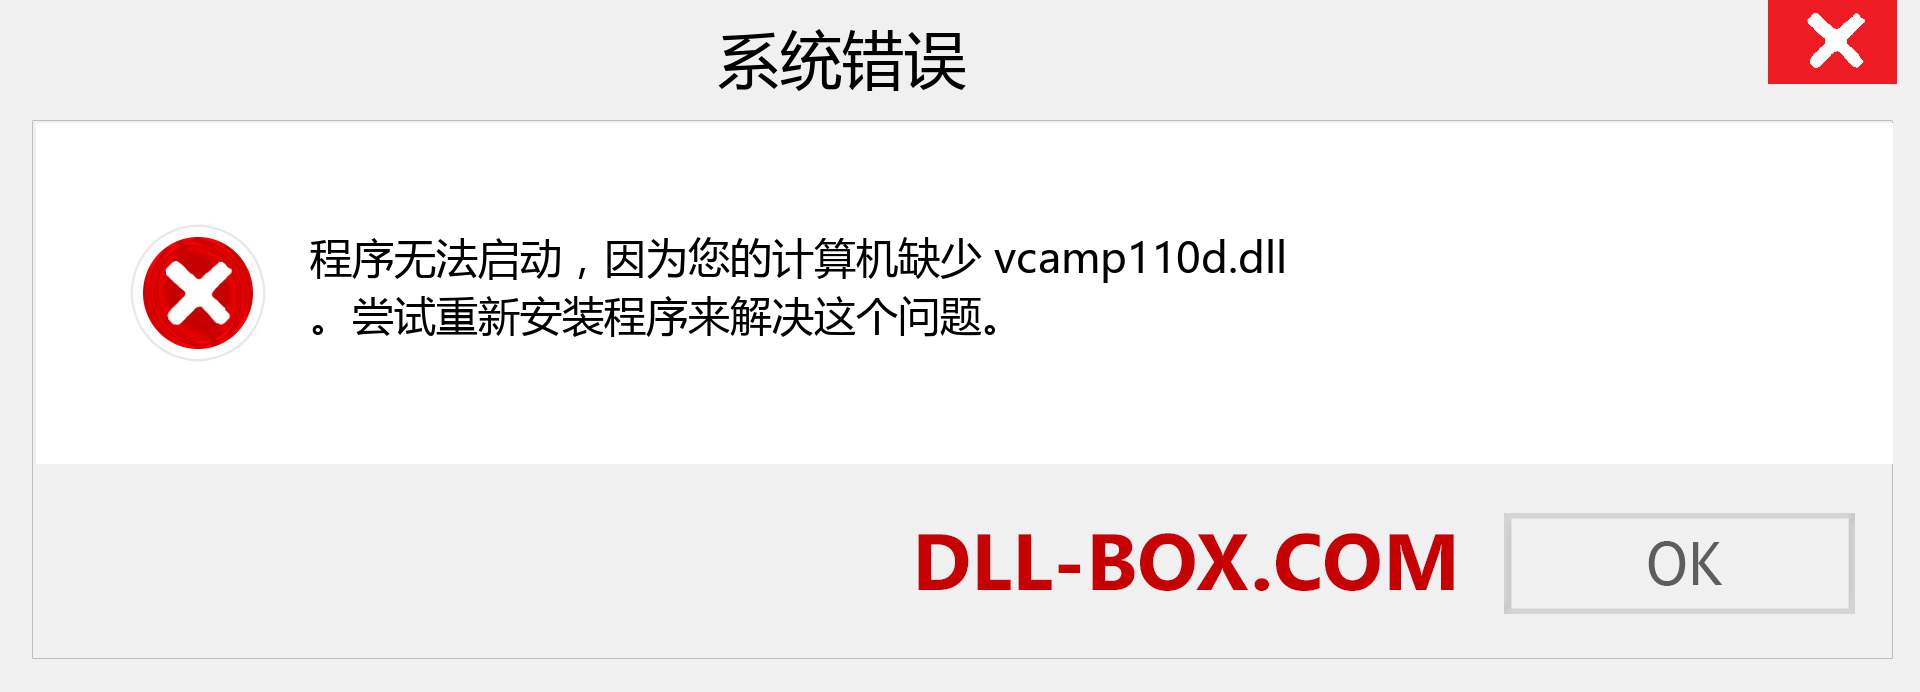 vcamp110d.dll 文件丢失？。 适用于 Windows 7、8、10 的下载 - 修复 Windows、照片、图像上的 vcamp110d dll 丢失错误